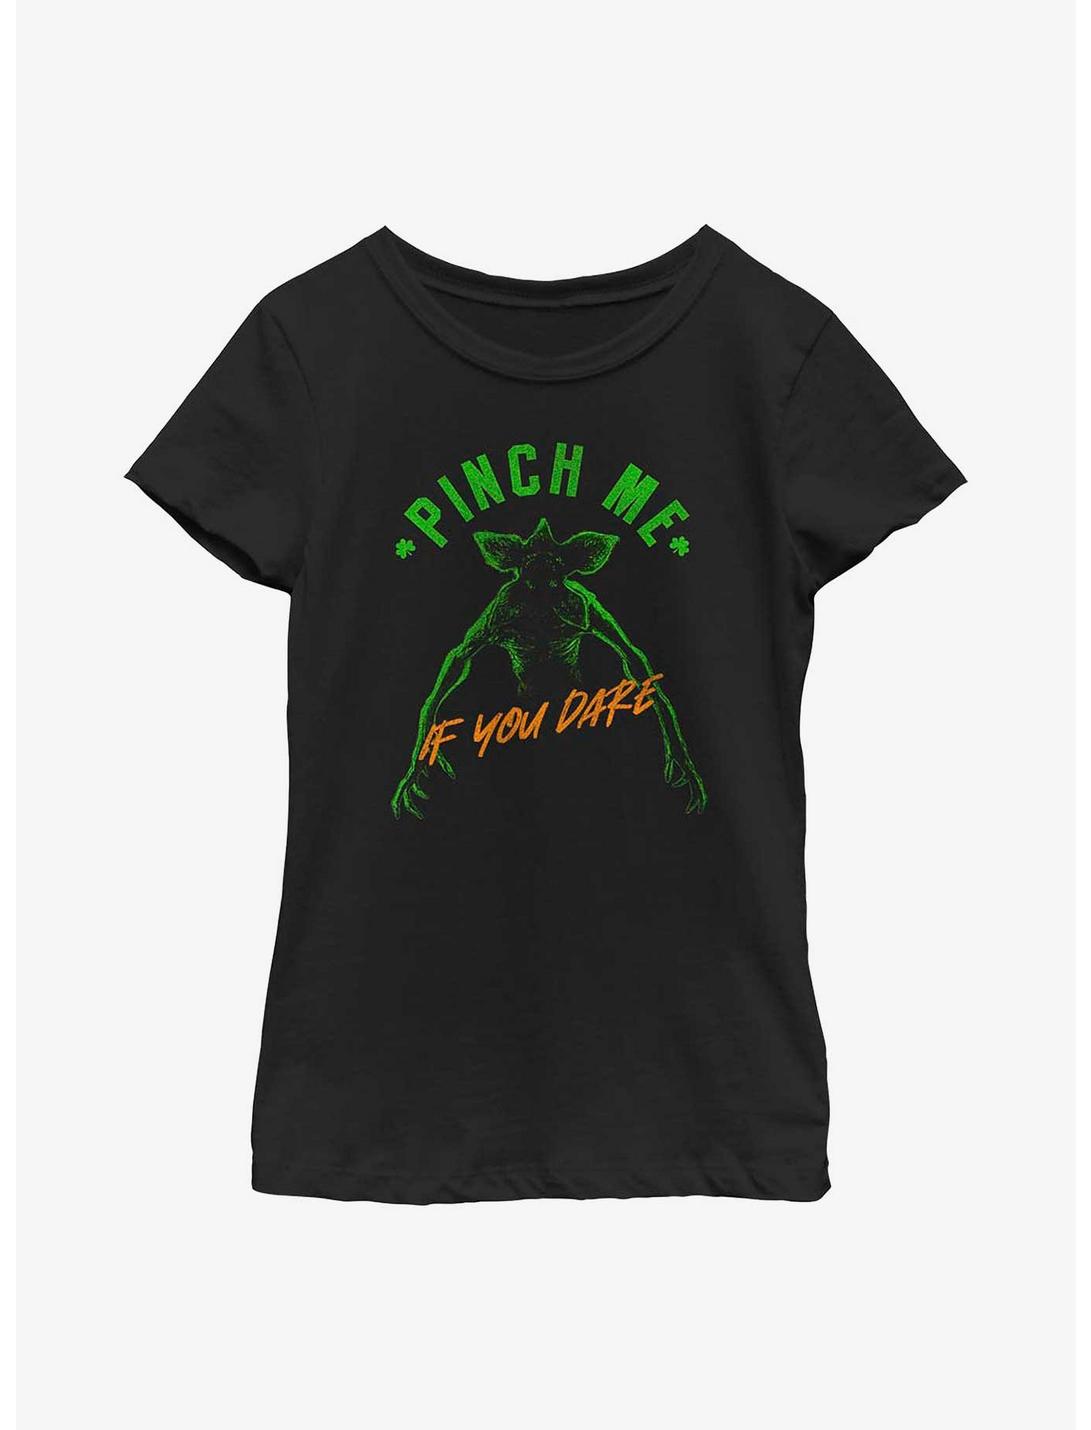 Stranger Things Pinch Me If You Dare Youth Girls T-Shirt, BLACK, hi-res